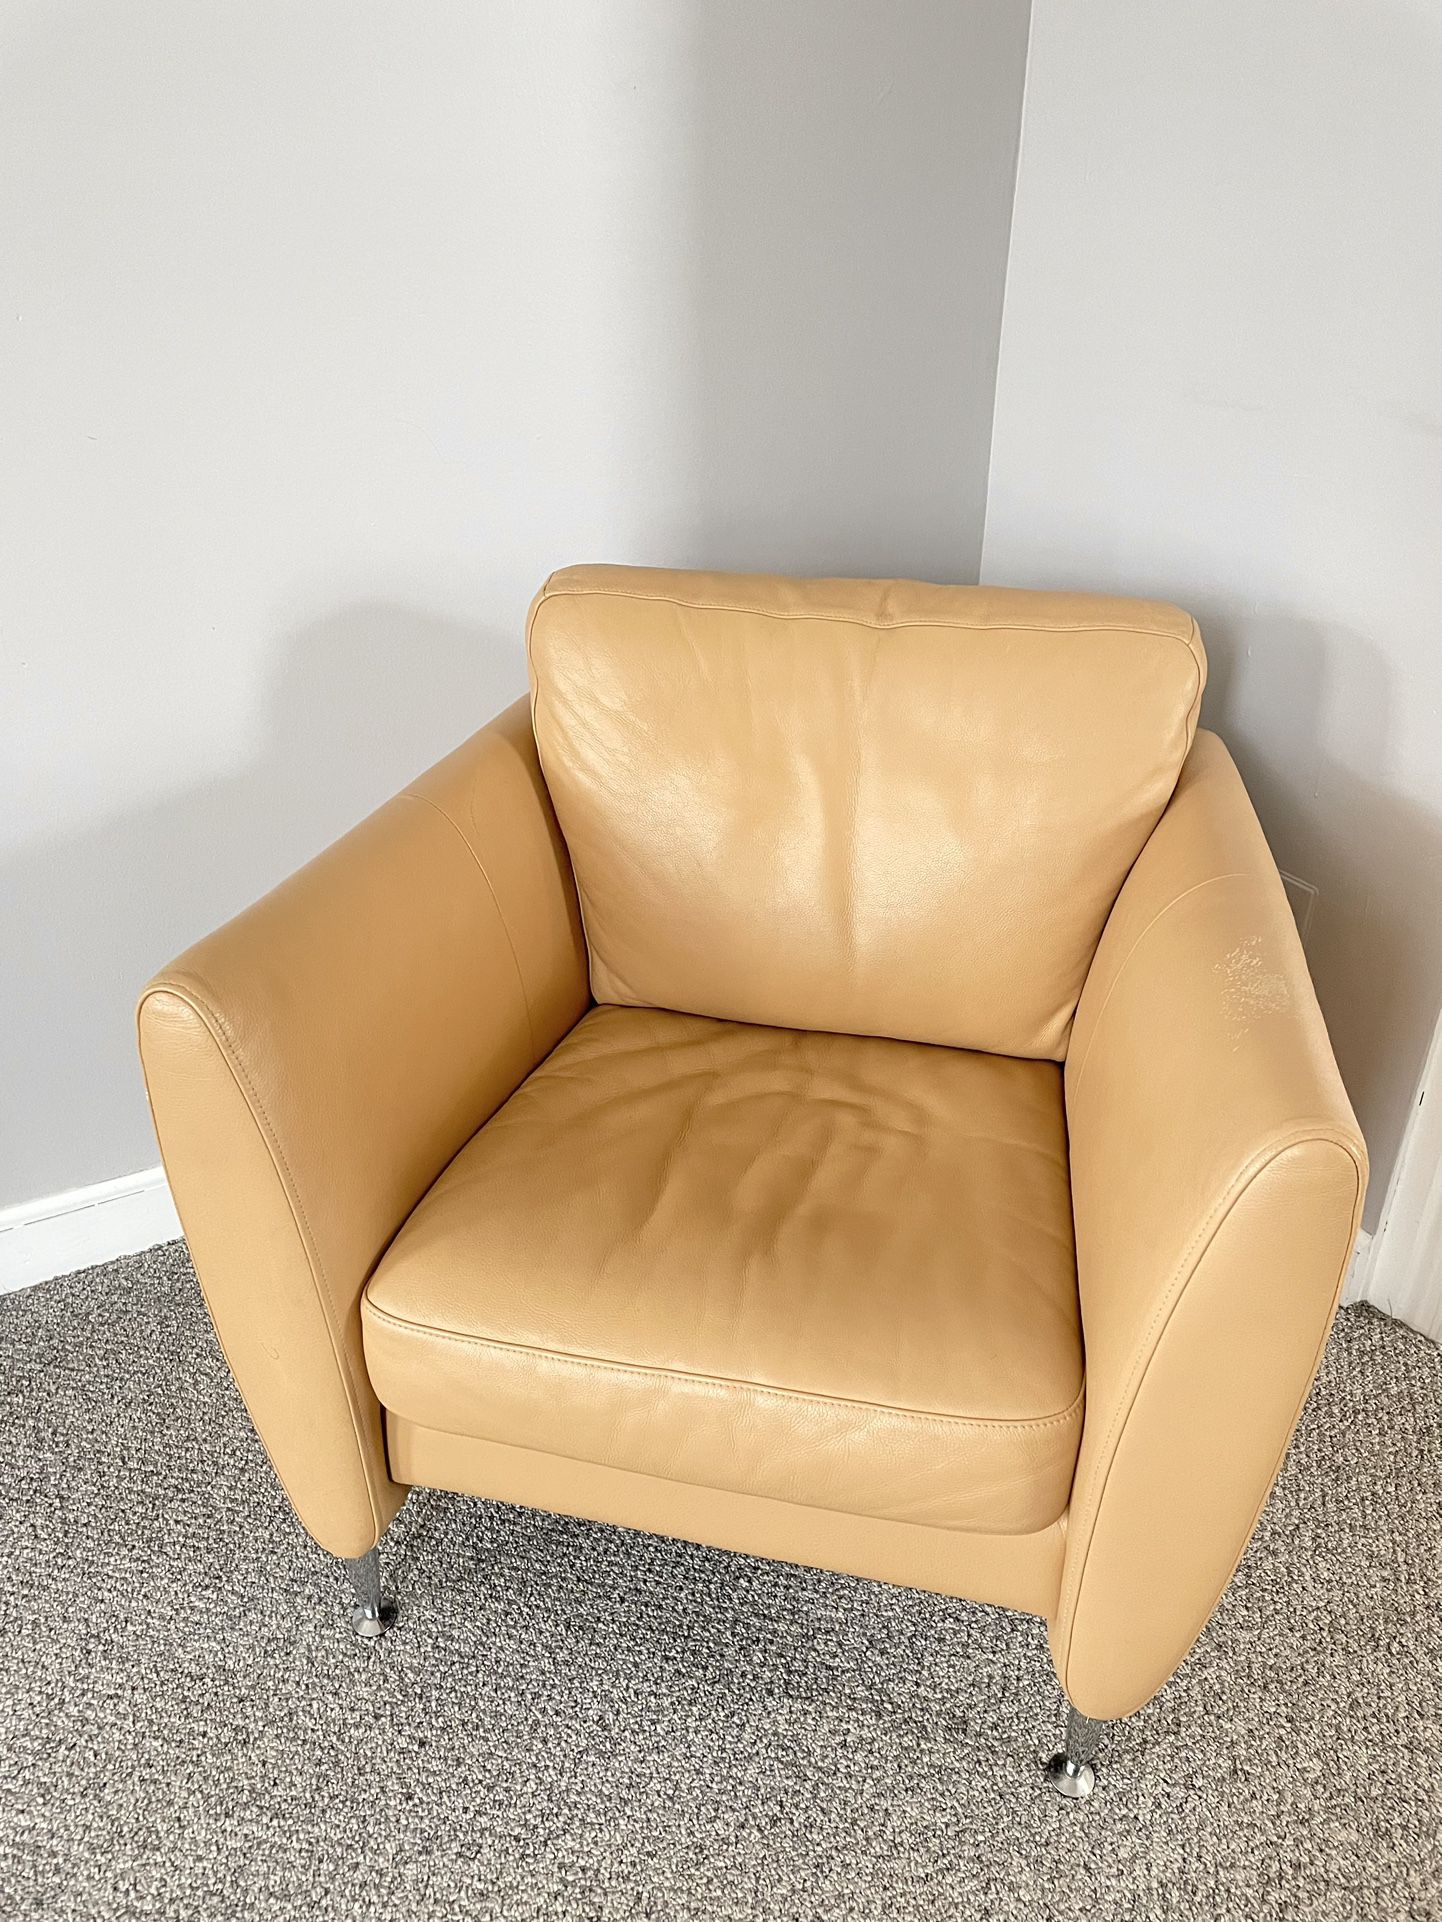 Brayton International Tan Leather Chair